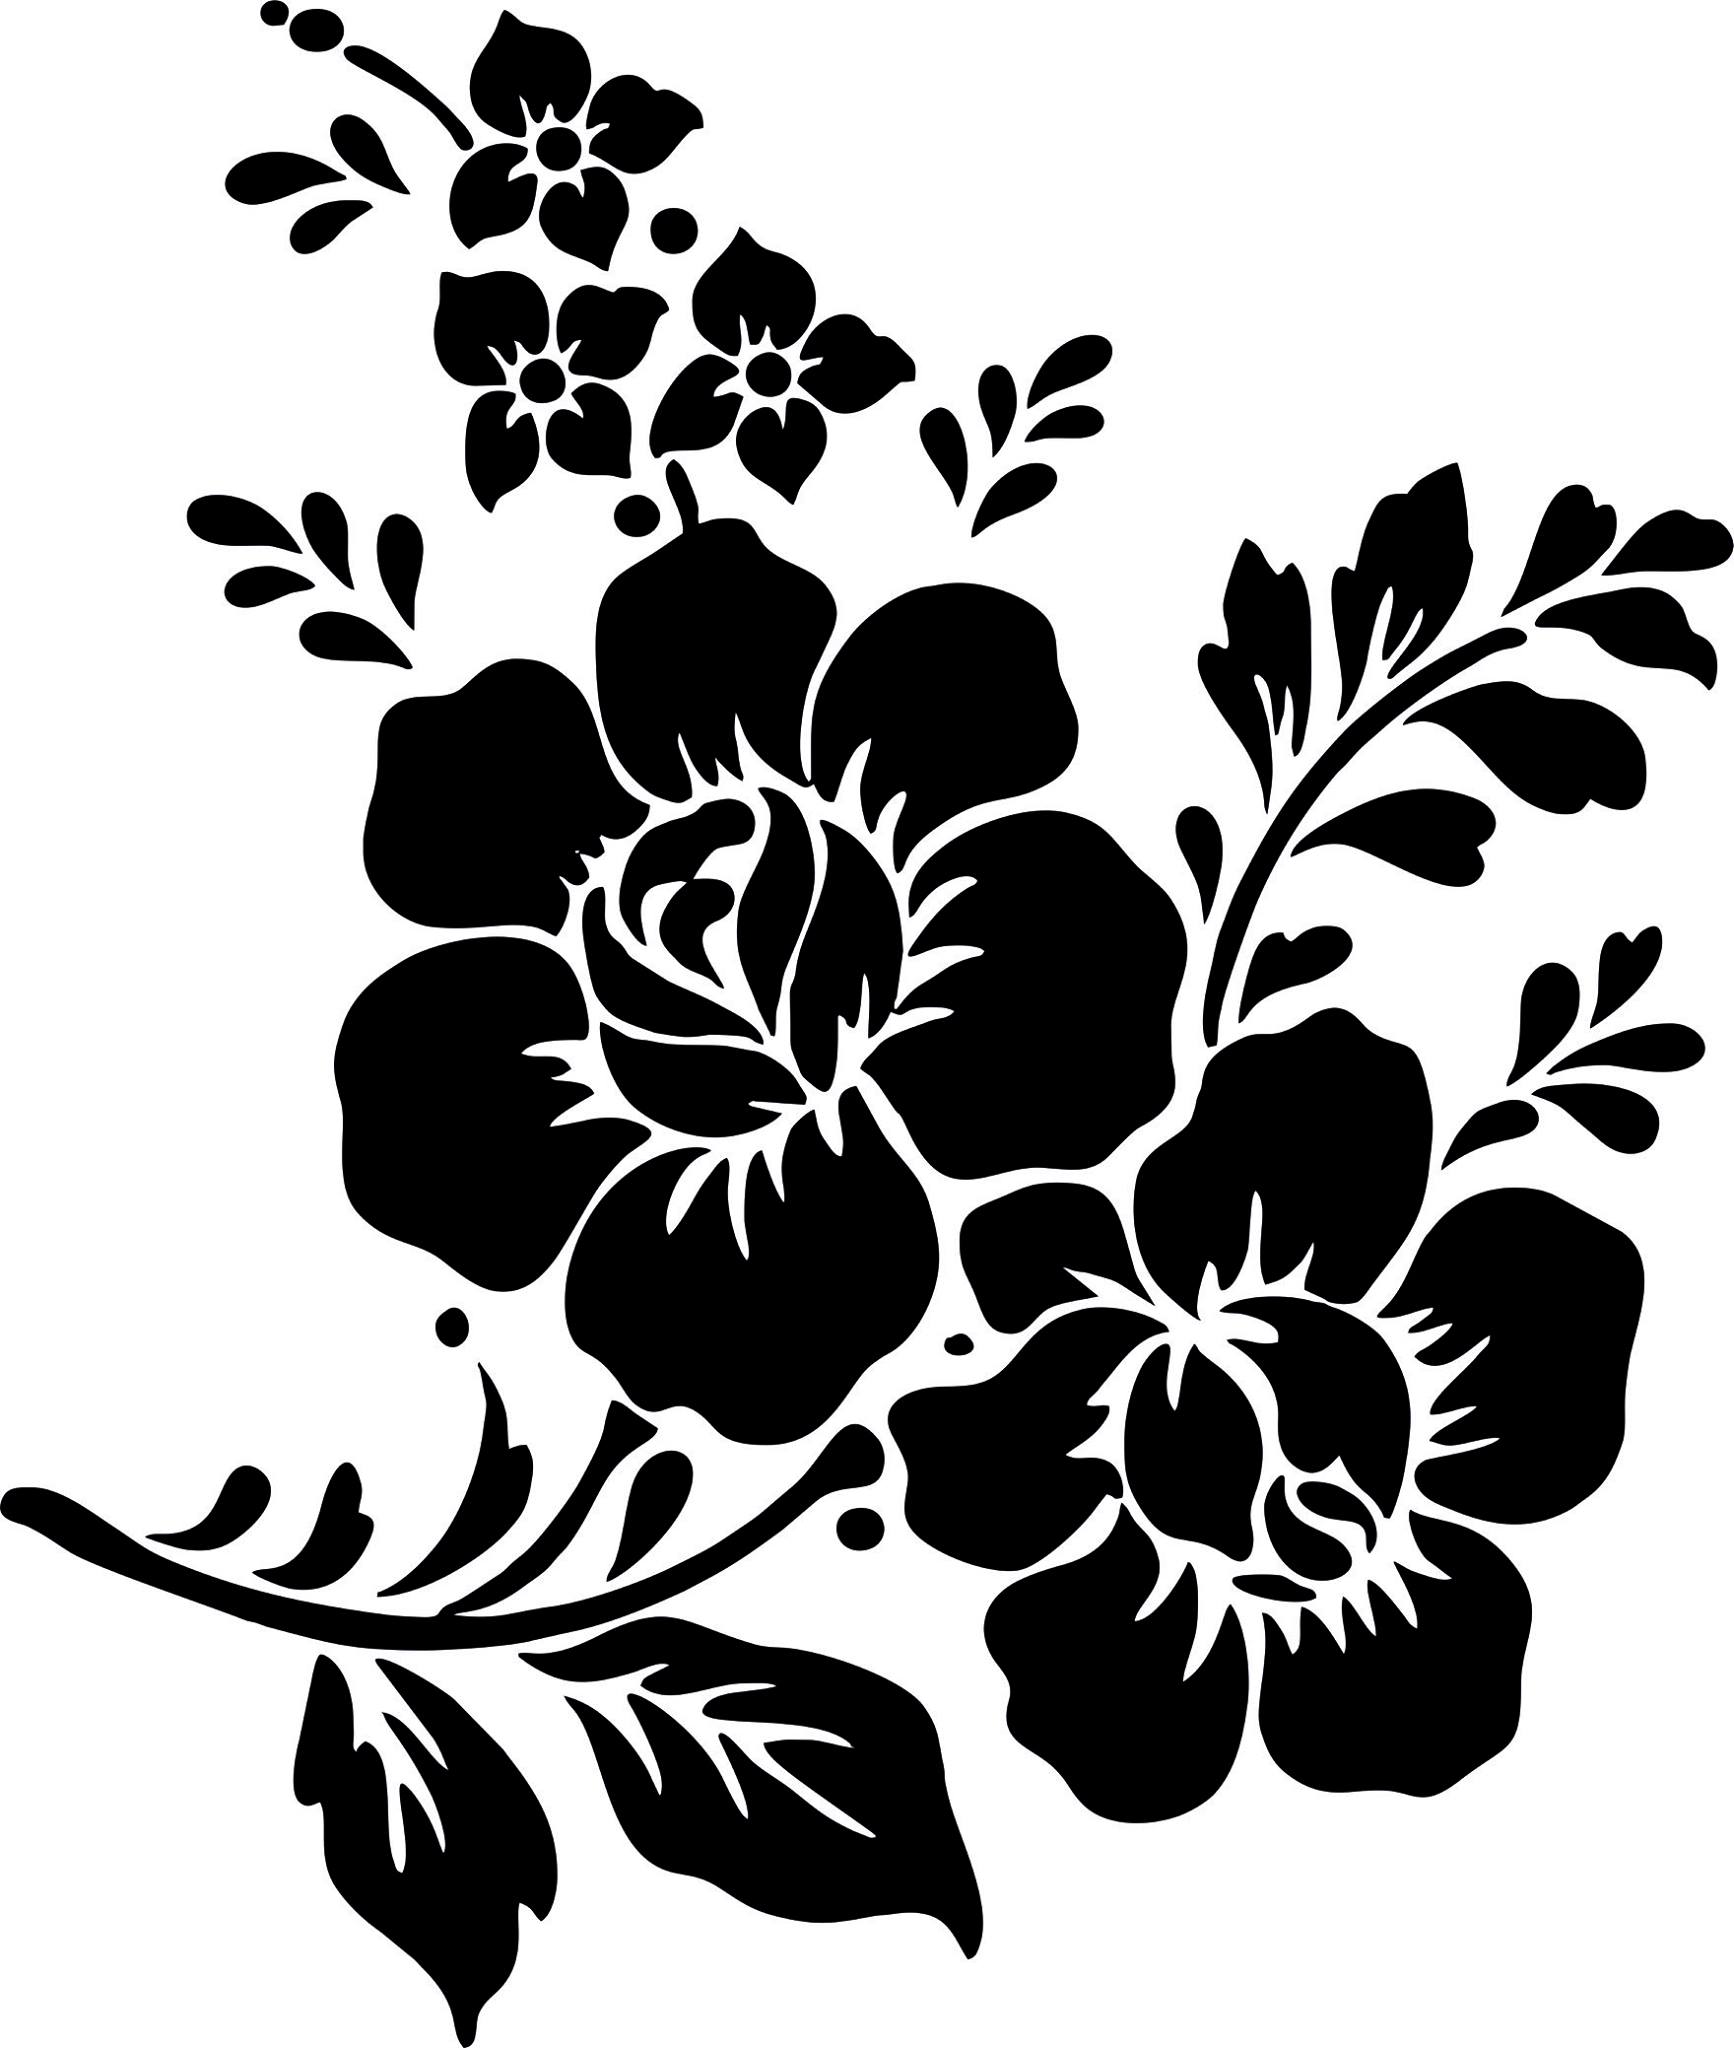 Rose Flower Vector Vector Art jpg Image Free Download